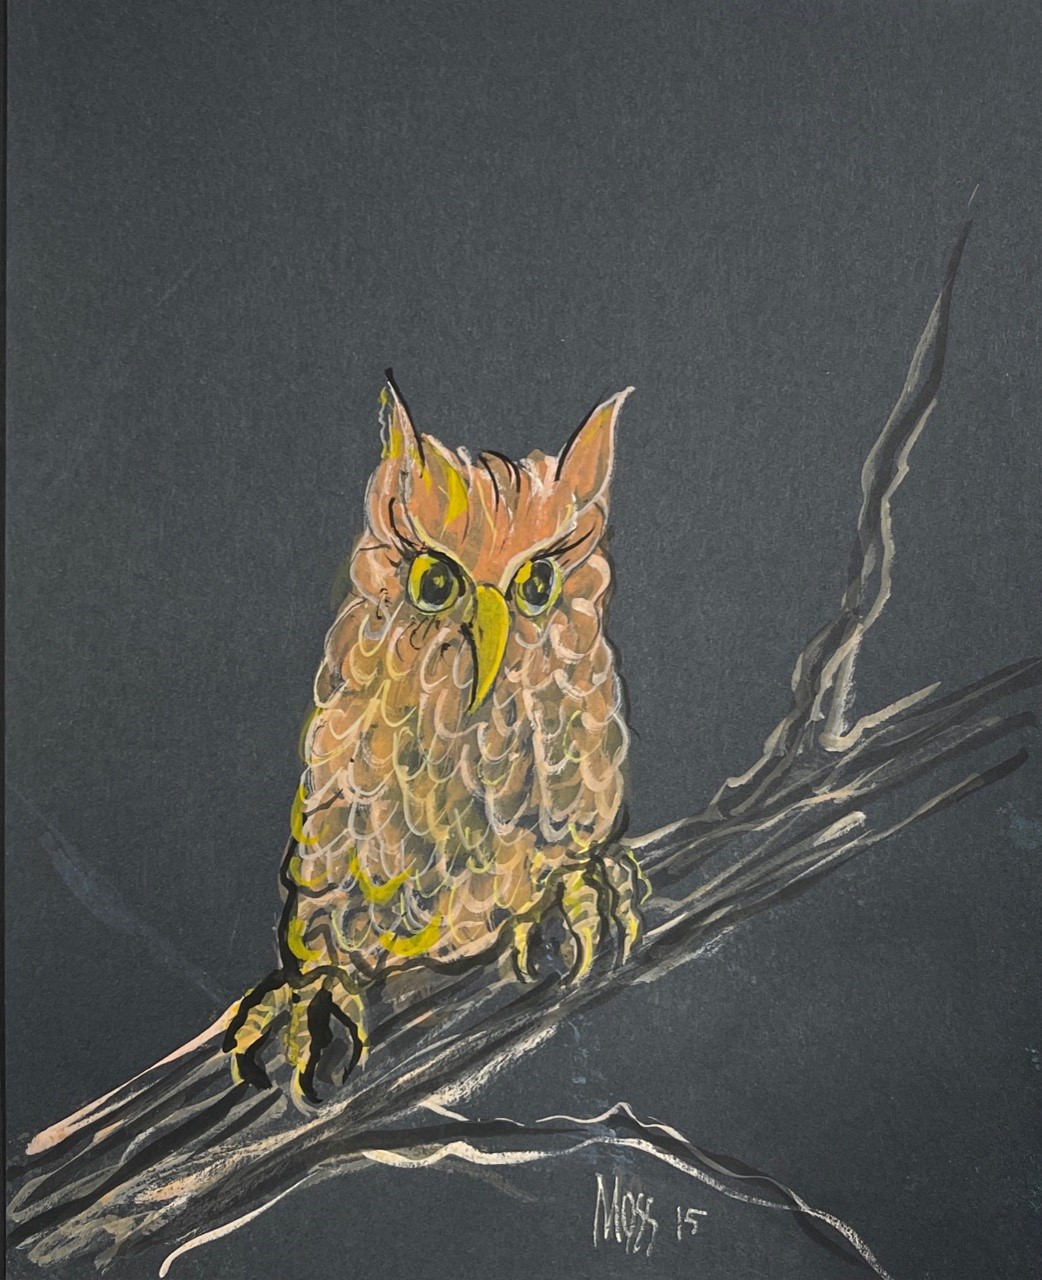 P BuckleyMoss Original Watercolor Painting - Owl on Black Paper